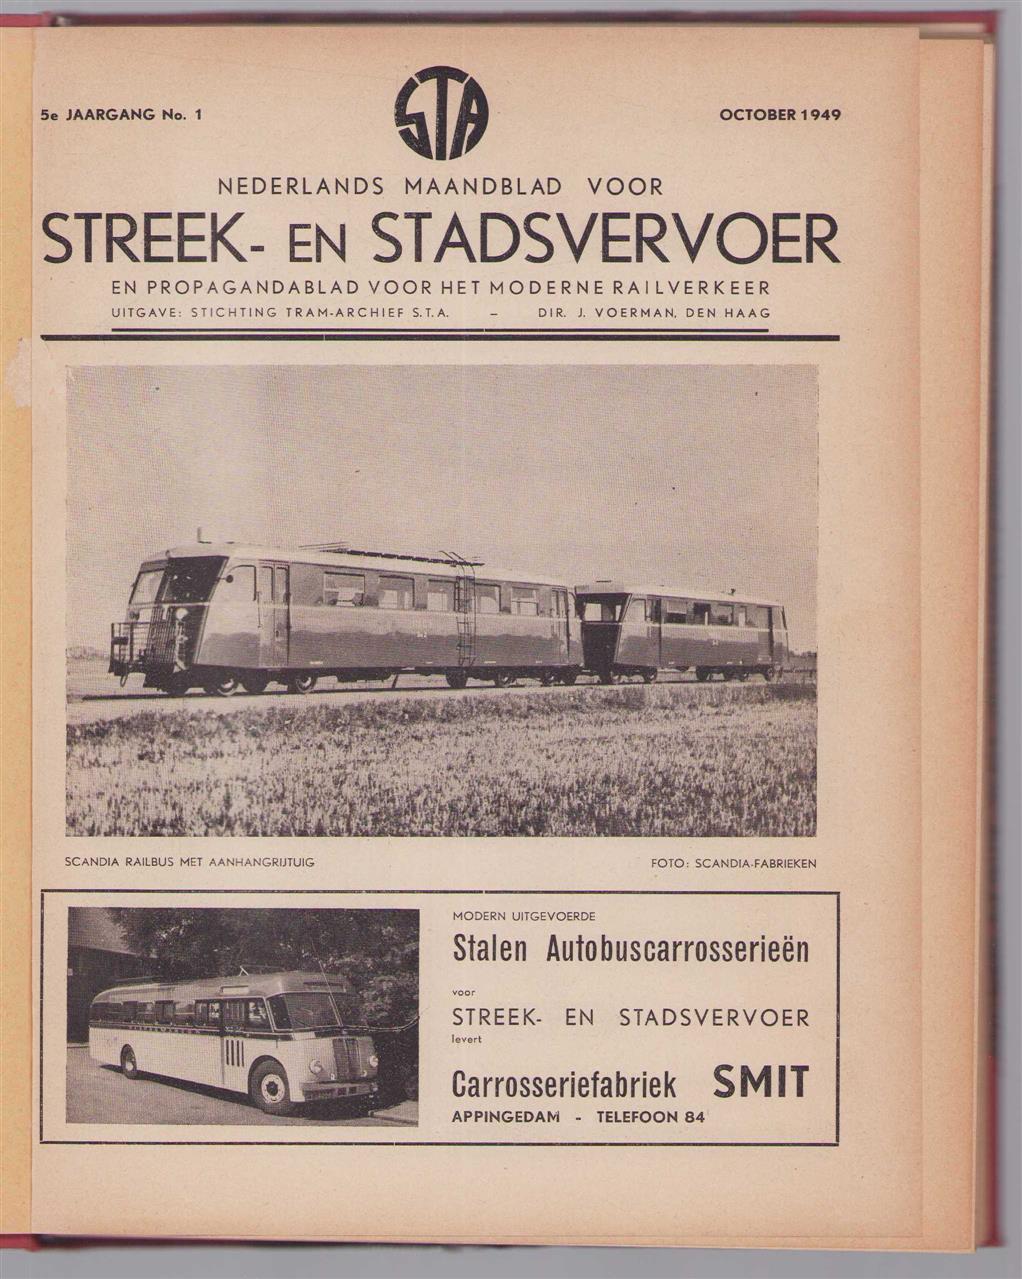 n.n - 5e jaargang - Nederlands maandblad voor streek- en stadsvervoer: propagandablad voor het moderne railverkeer.